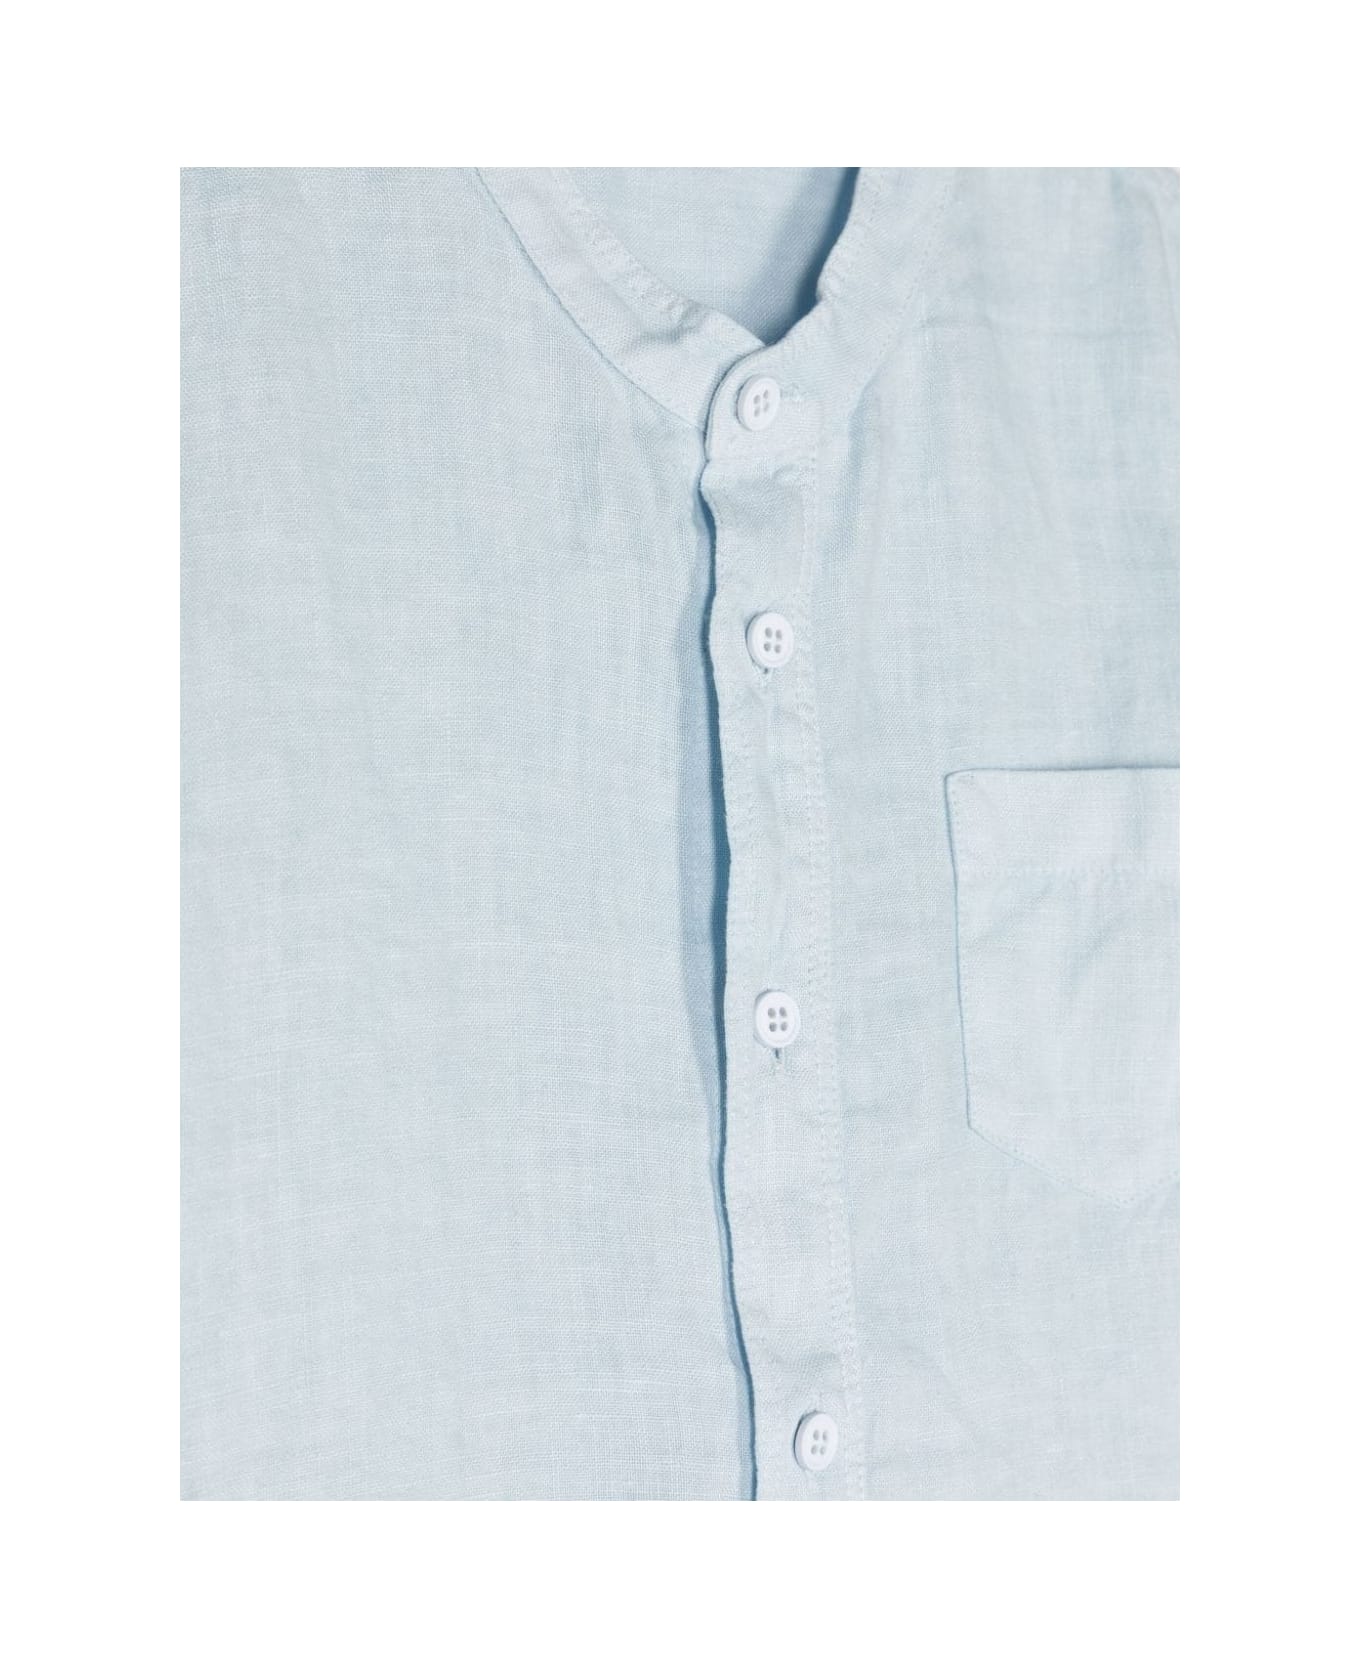 Il Gufo Mandarin-collar Shirt In Light Blue Linen - Blue